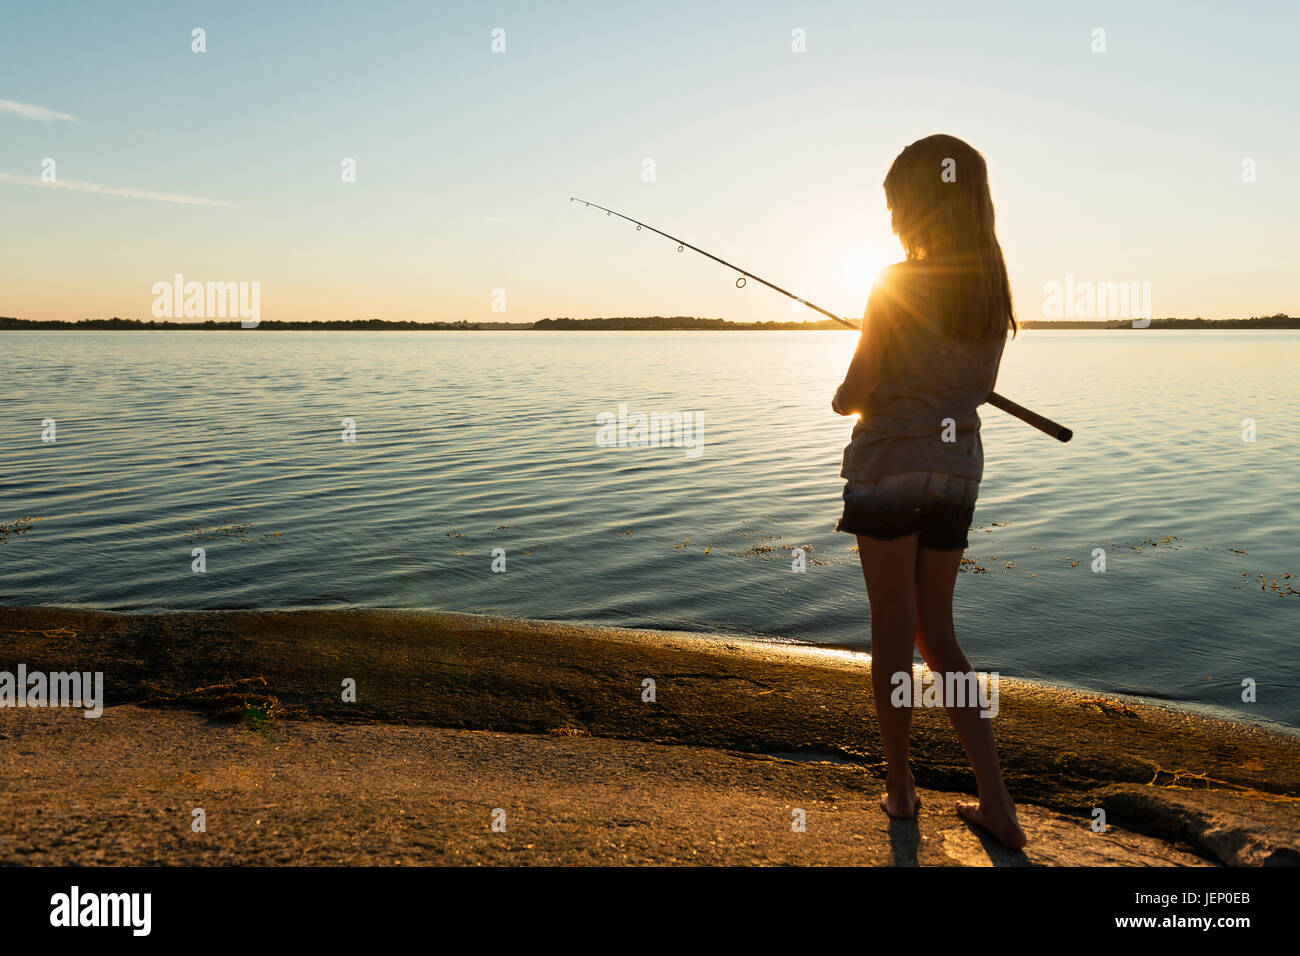 Girl fishing in sea, dusk Stock Photo - Alamy